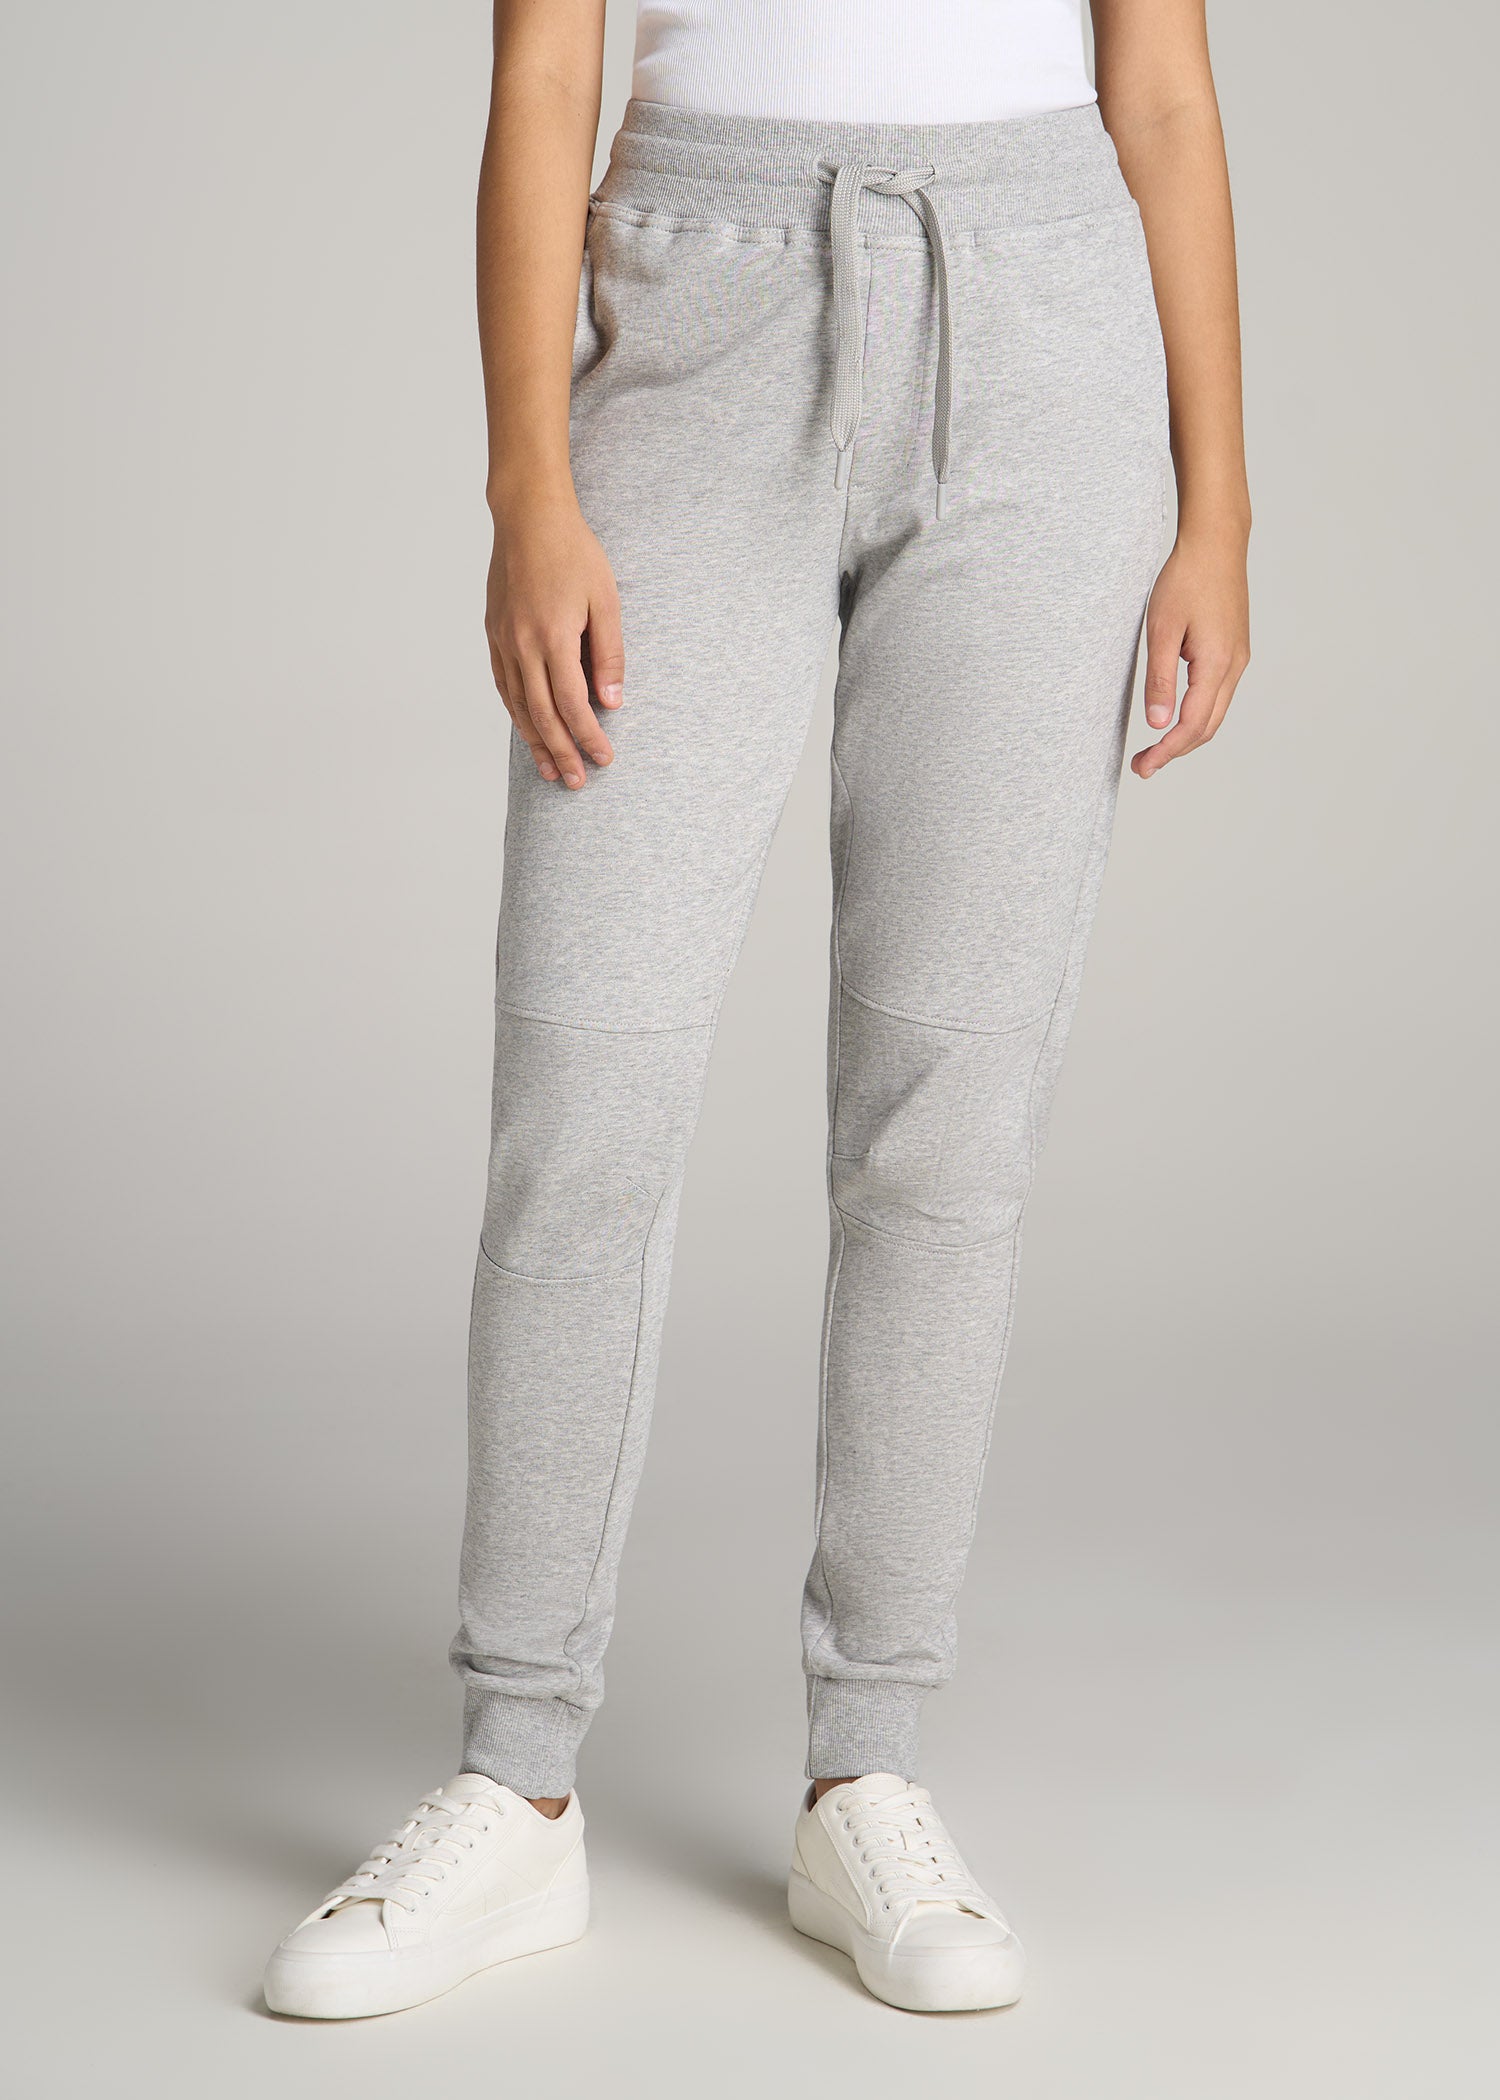 Women's Light Grey Jogger Sweatpants